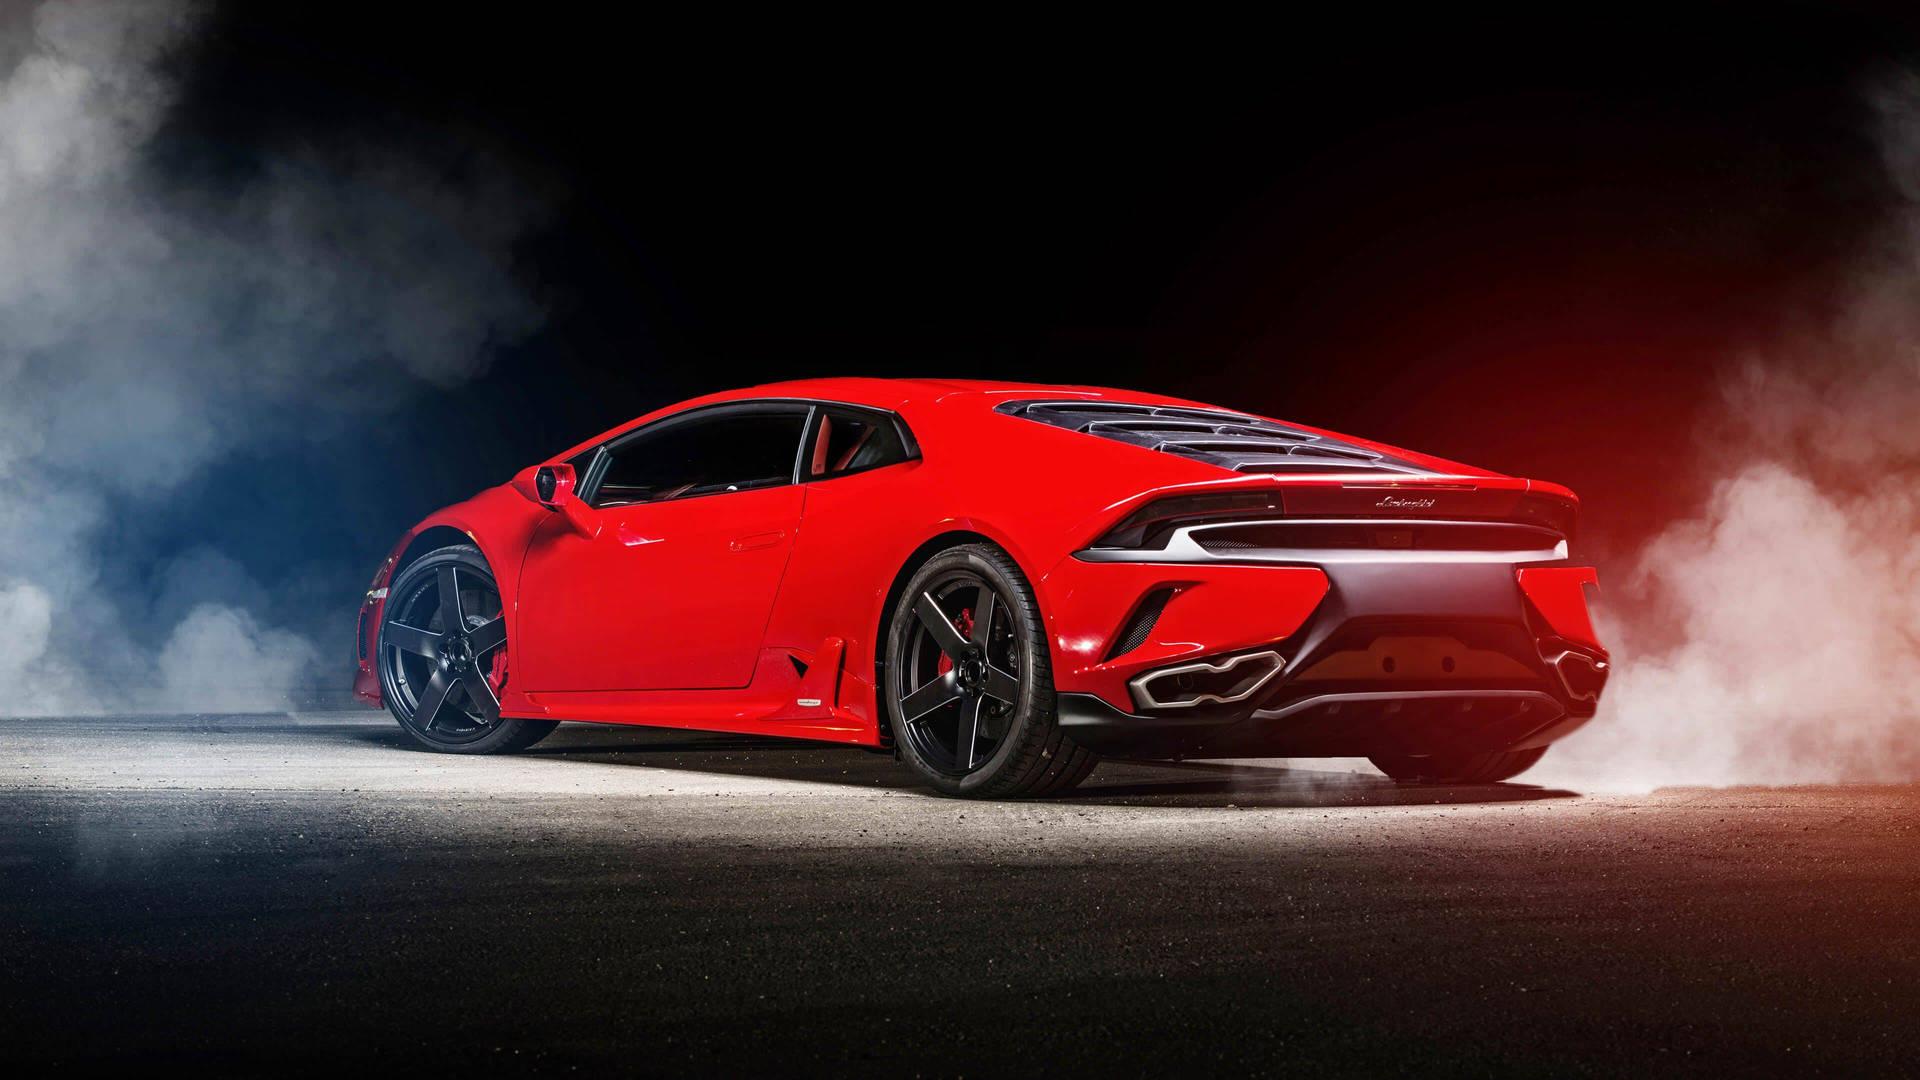 Cool Cars: Smoking Red Lamborghini Wallpaper